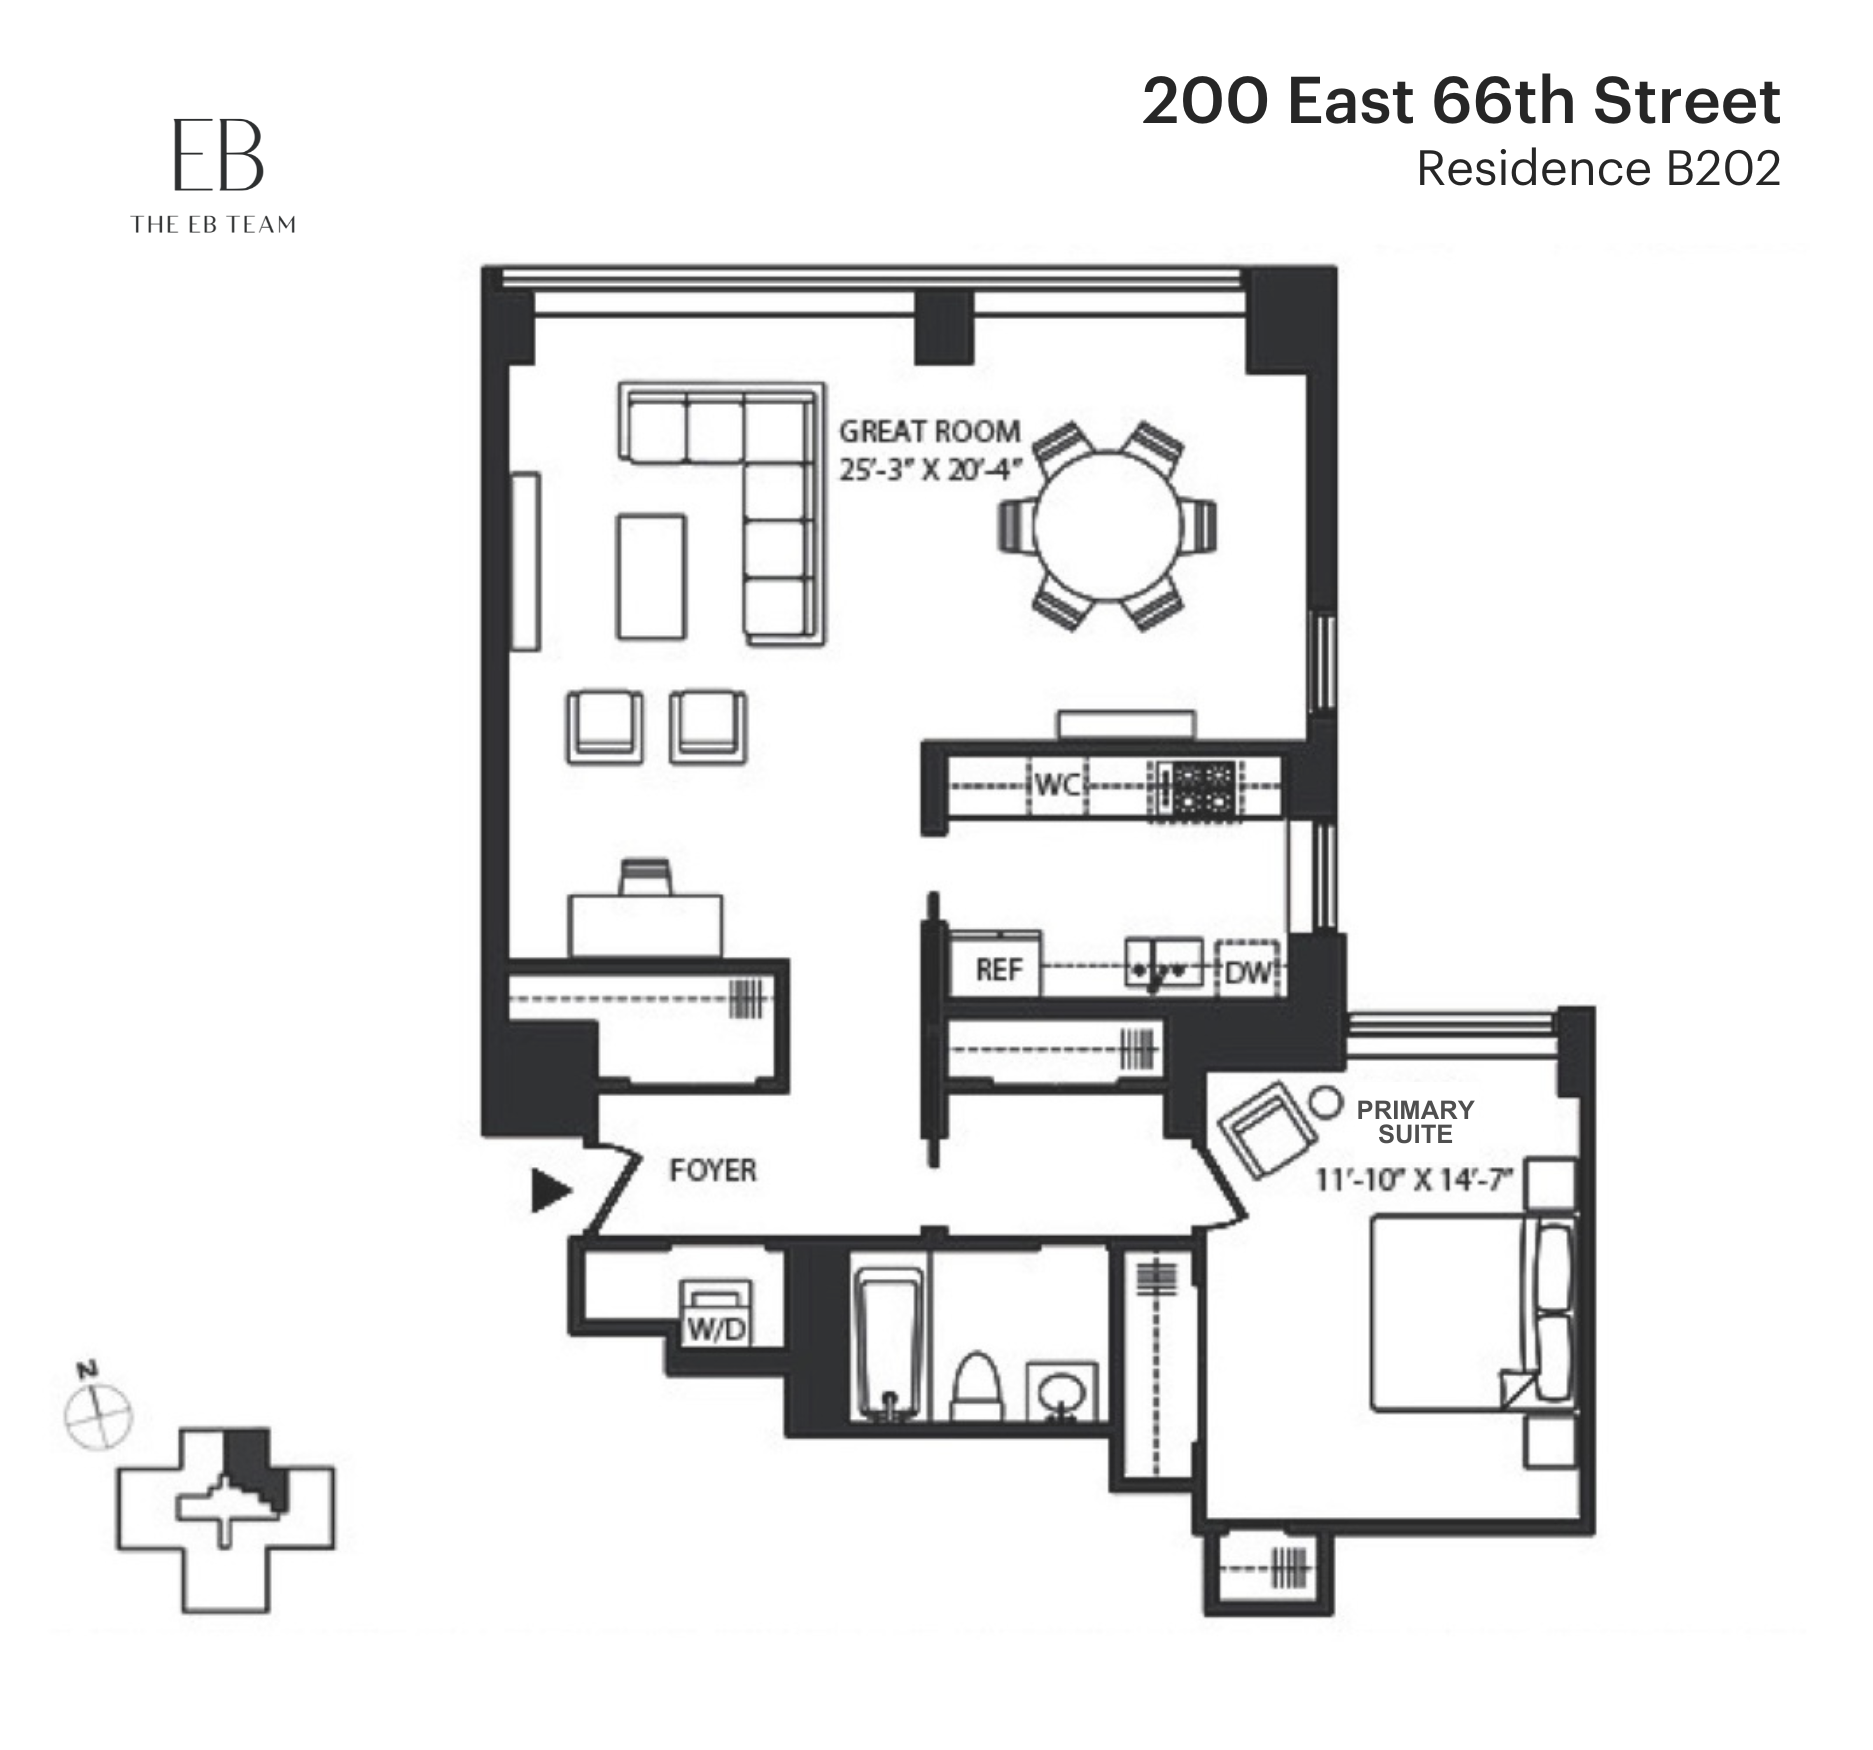 Floorplan for 200 East 66th Street, B202